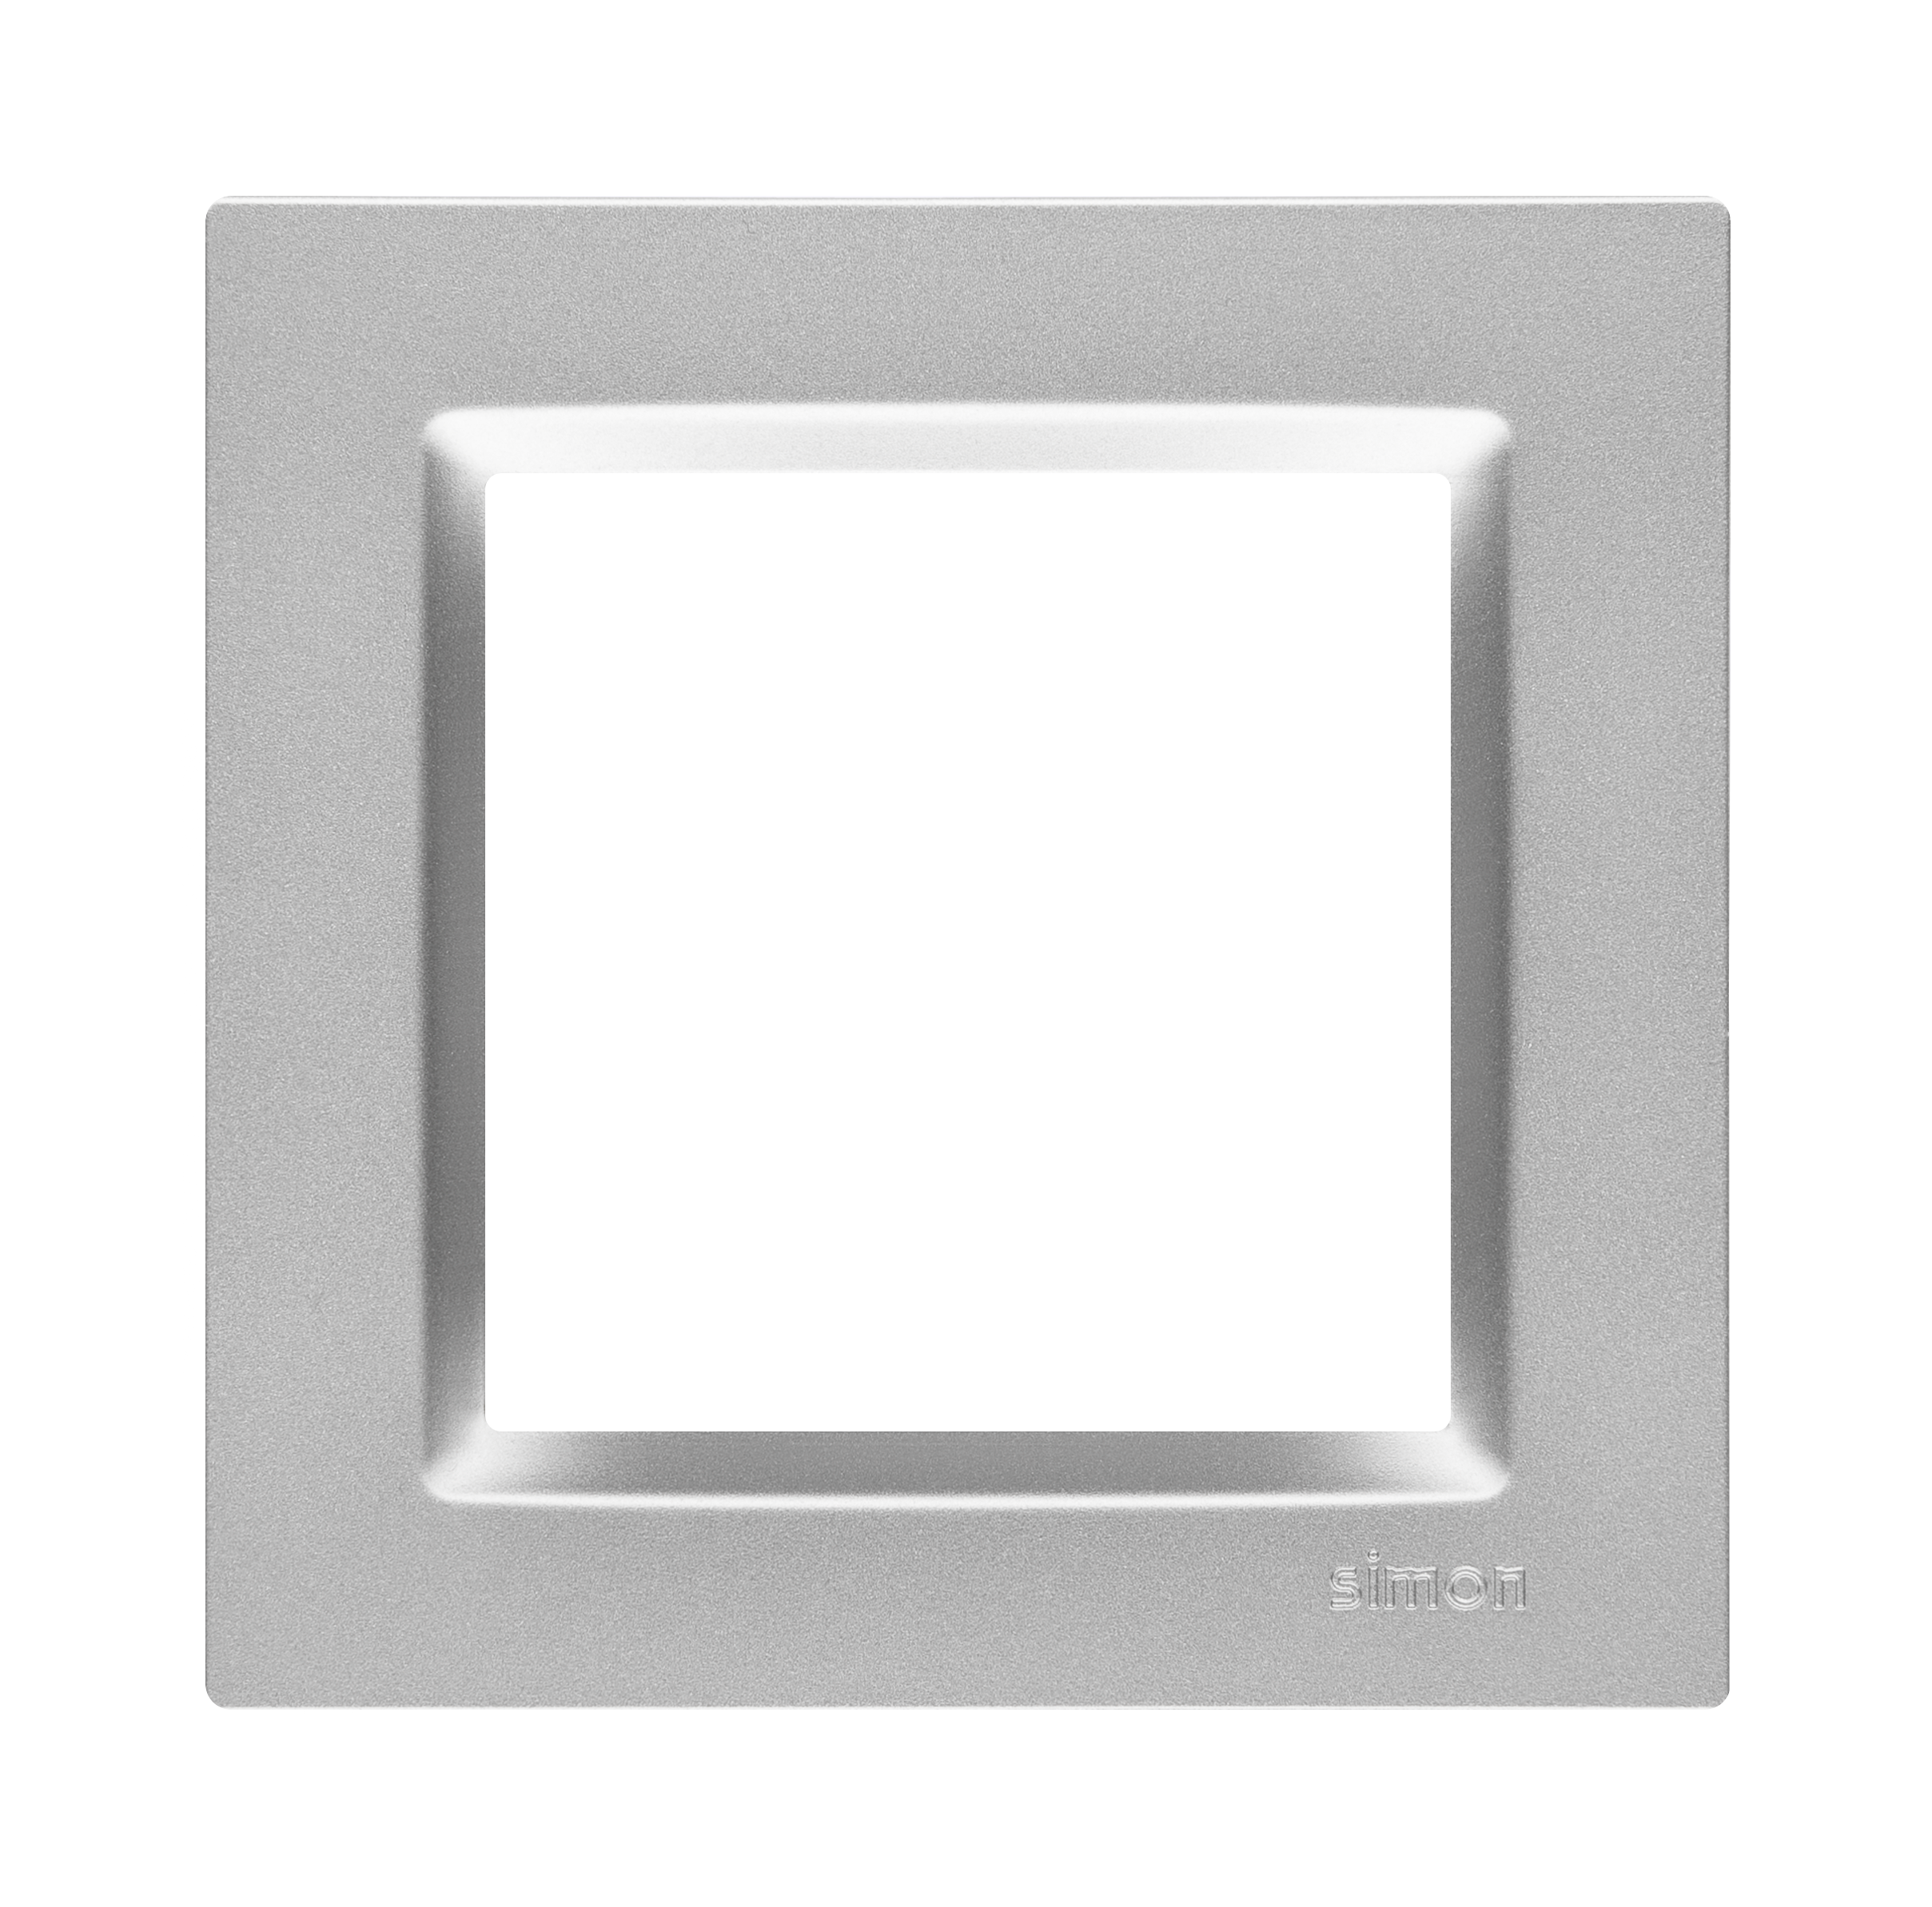 Рамка SIMON10 1x, серебро (CR1/43)